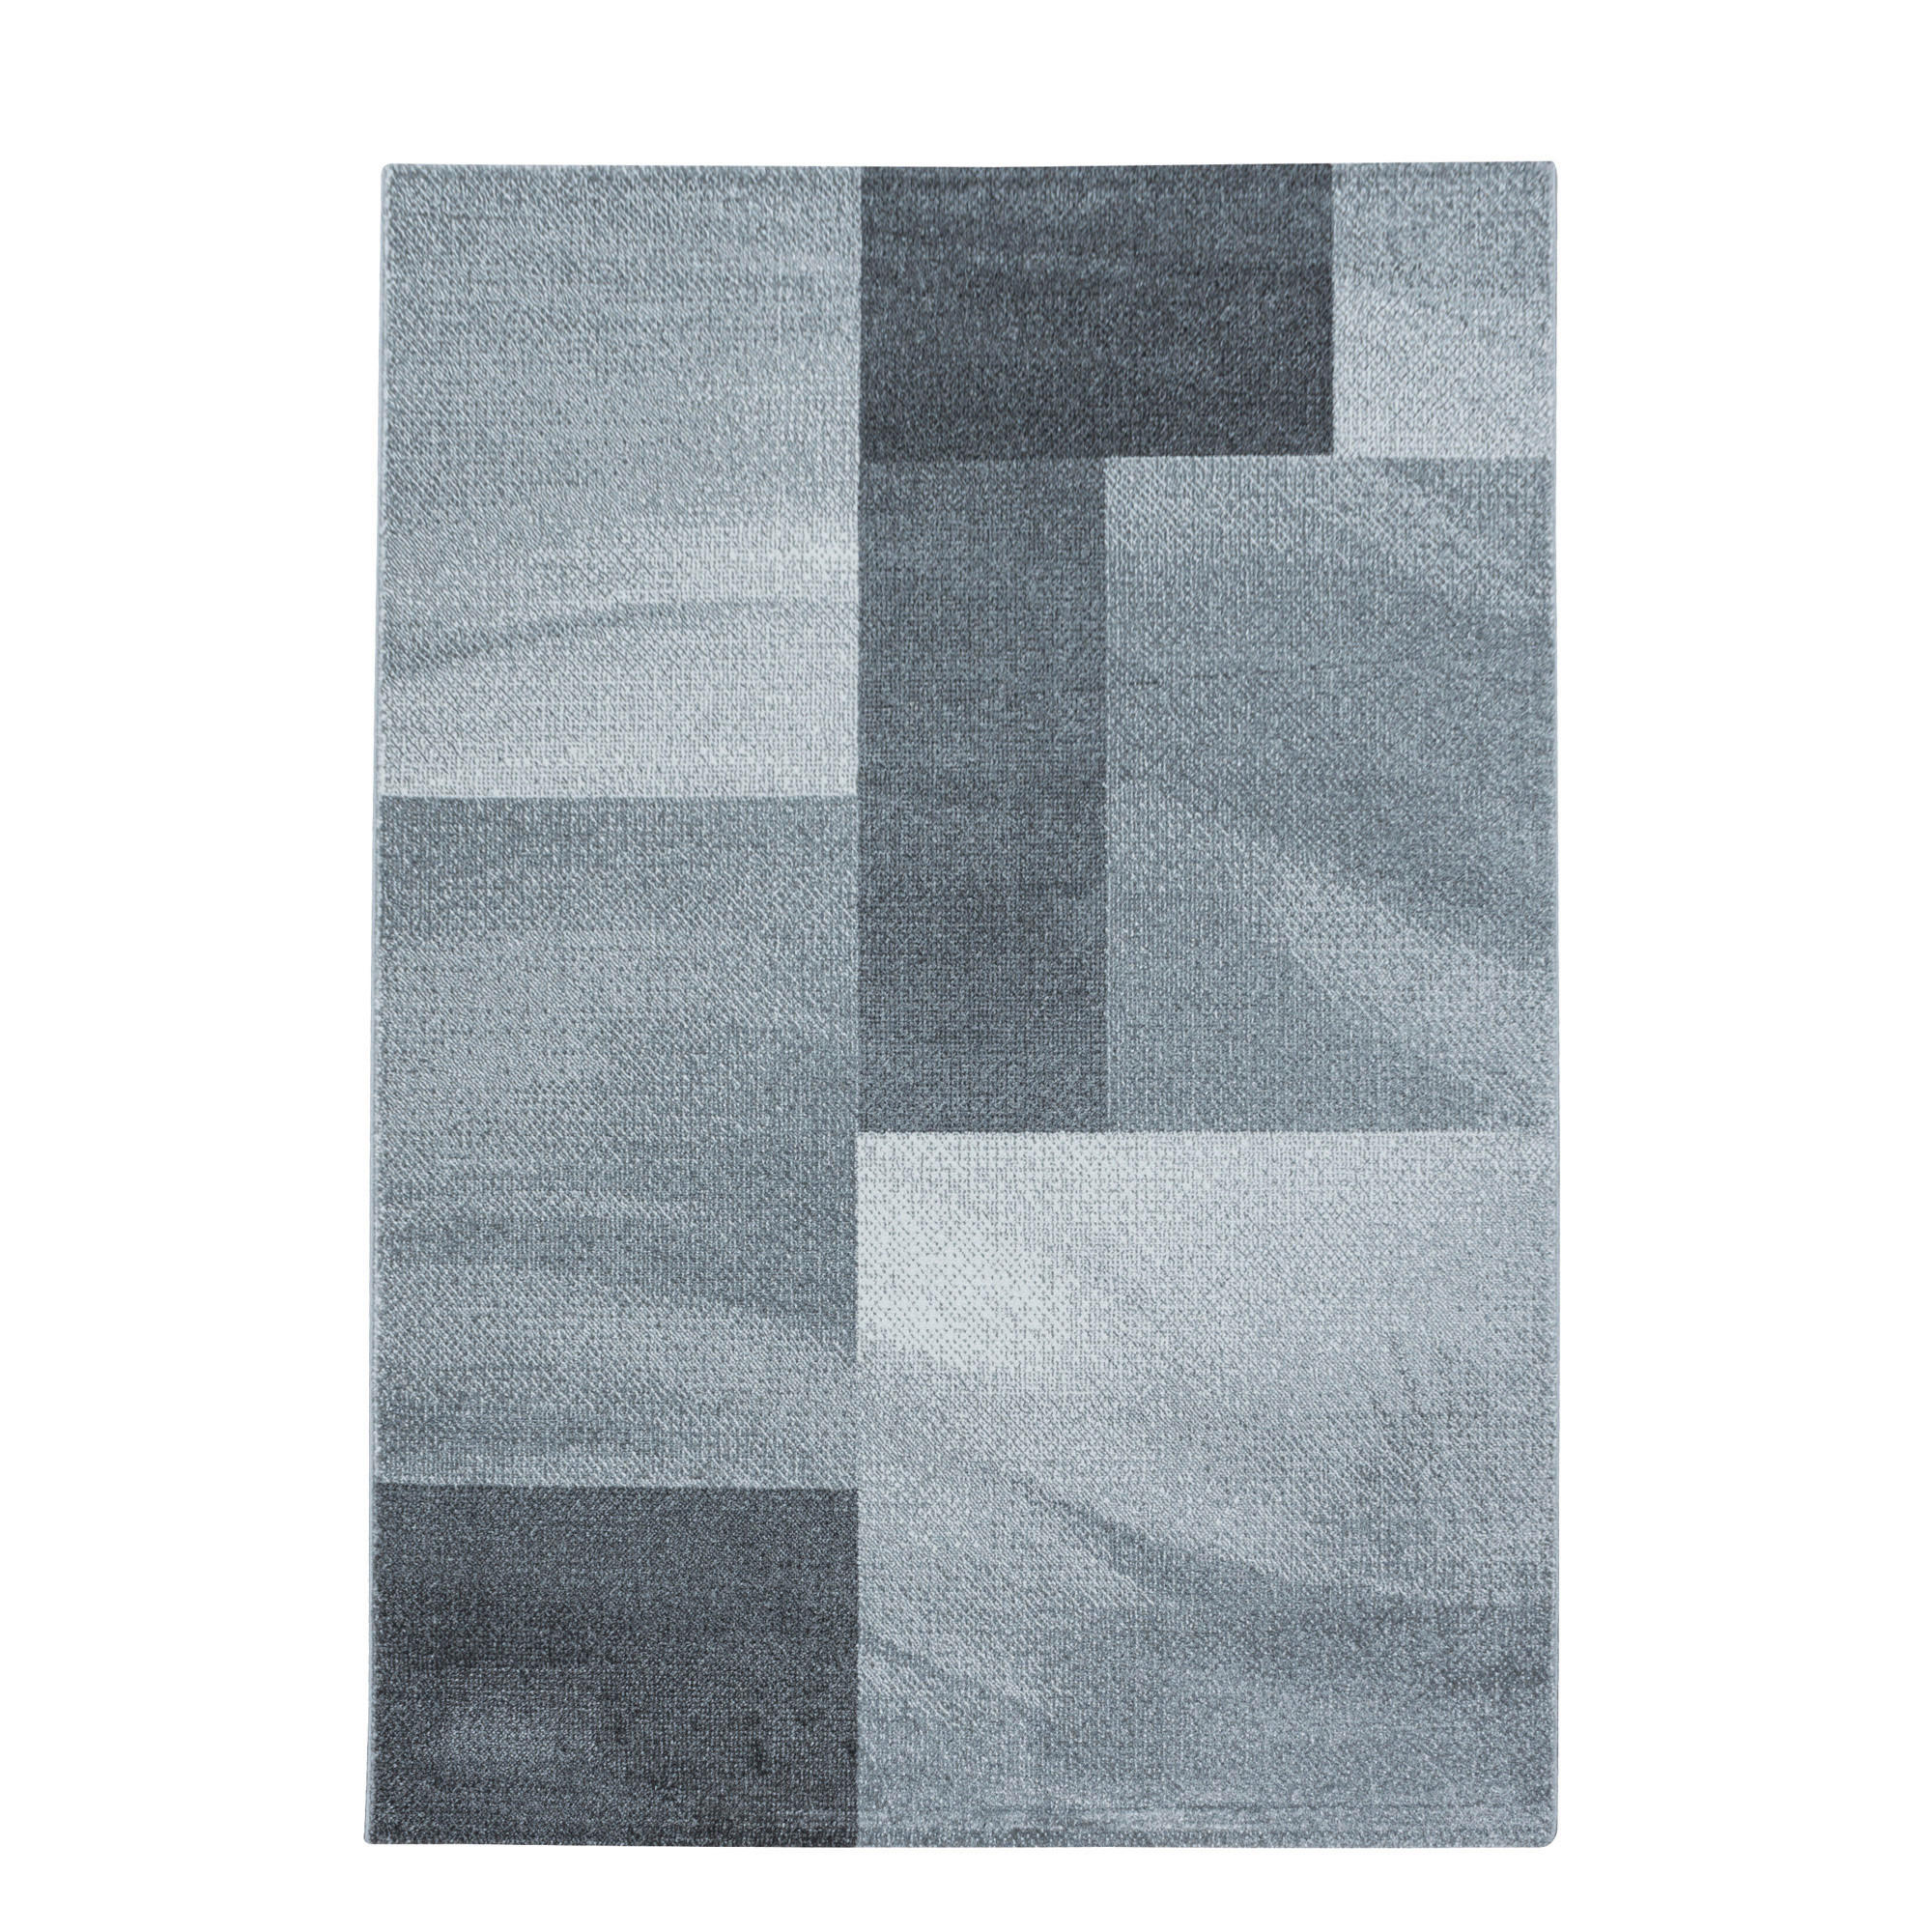 WEBTEPPICH  120/170 cm  Grau   - Grau, Basics, Textil (120/170cm) - Novel